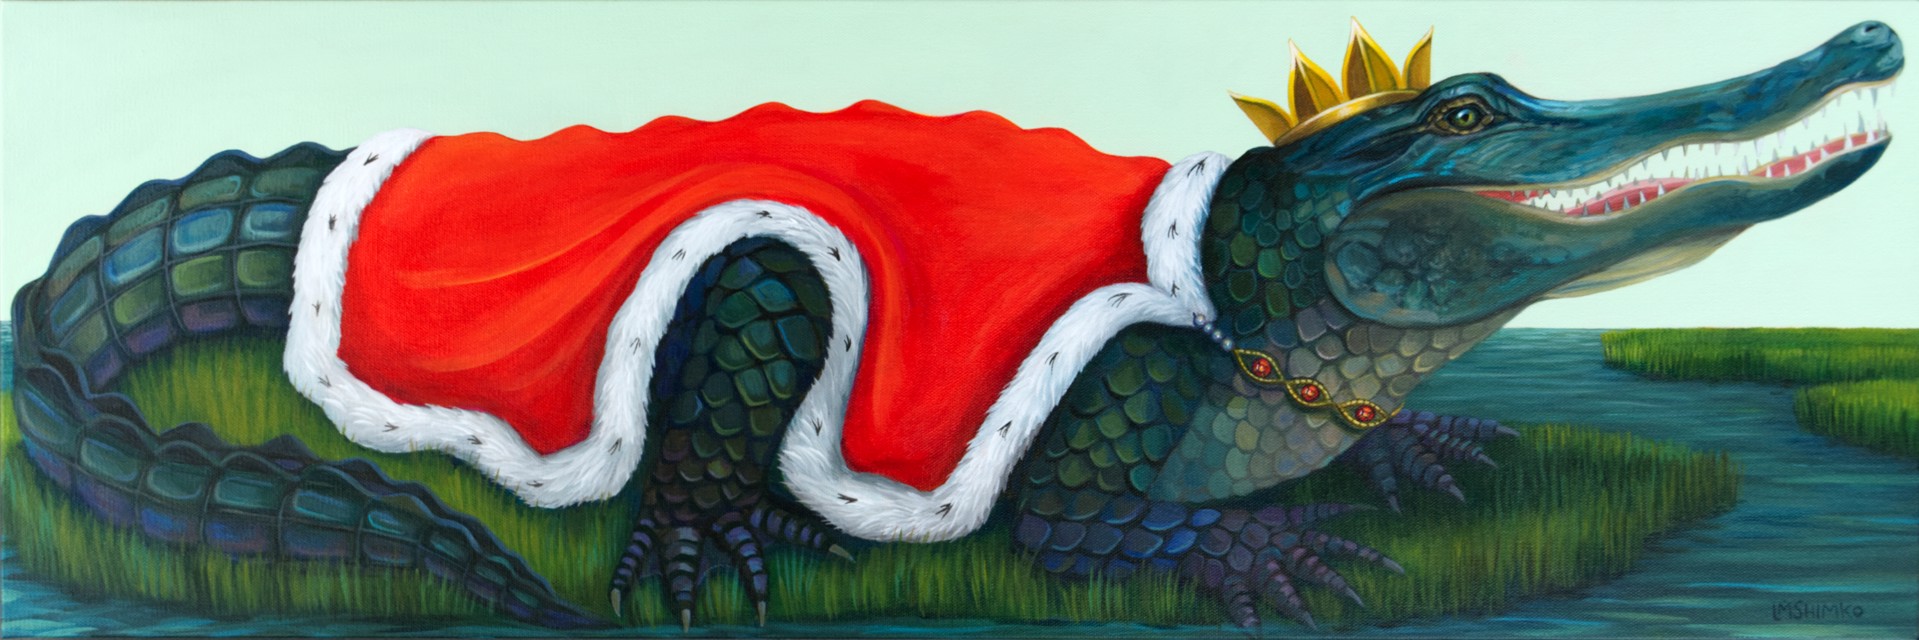 Royal Alligator III by Lisa Shimko